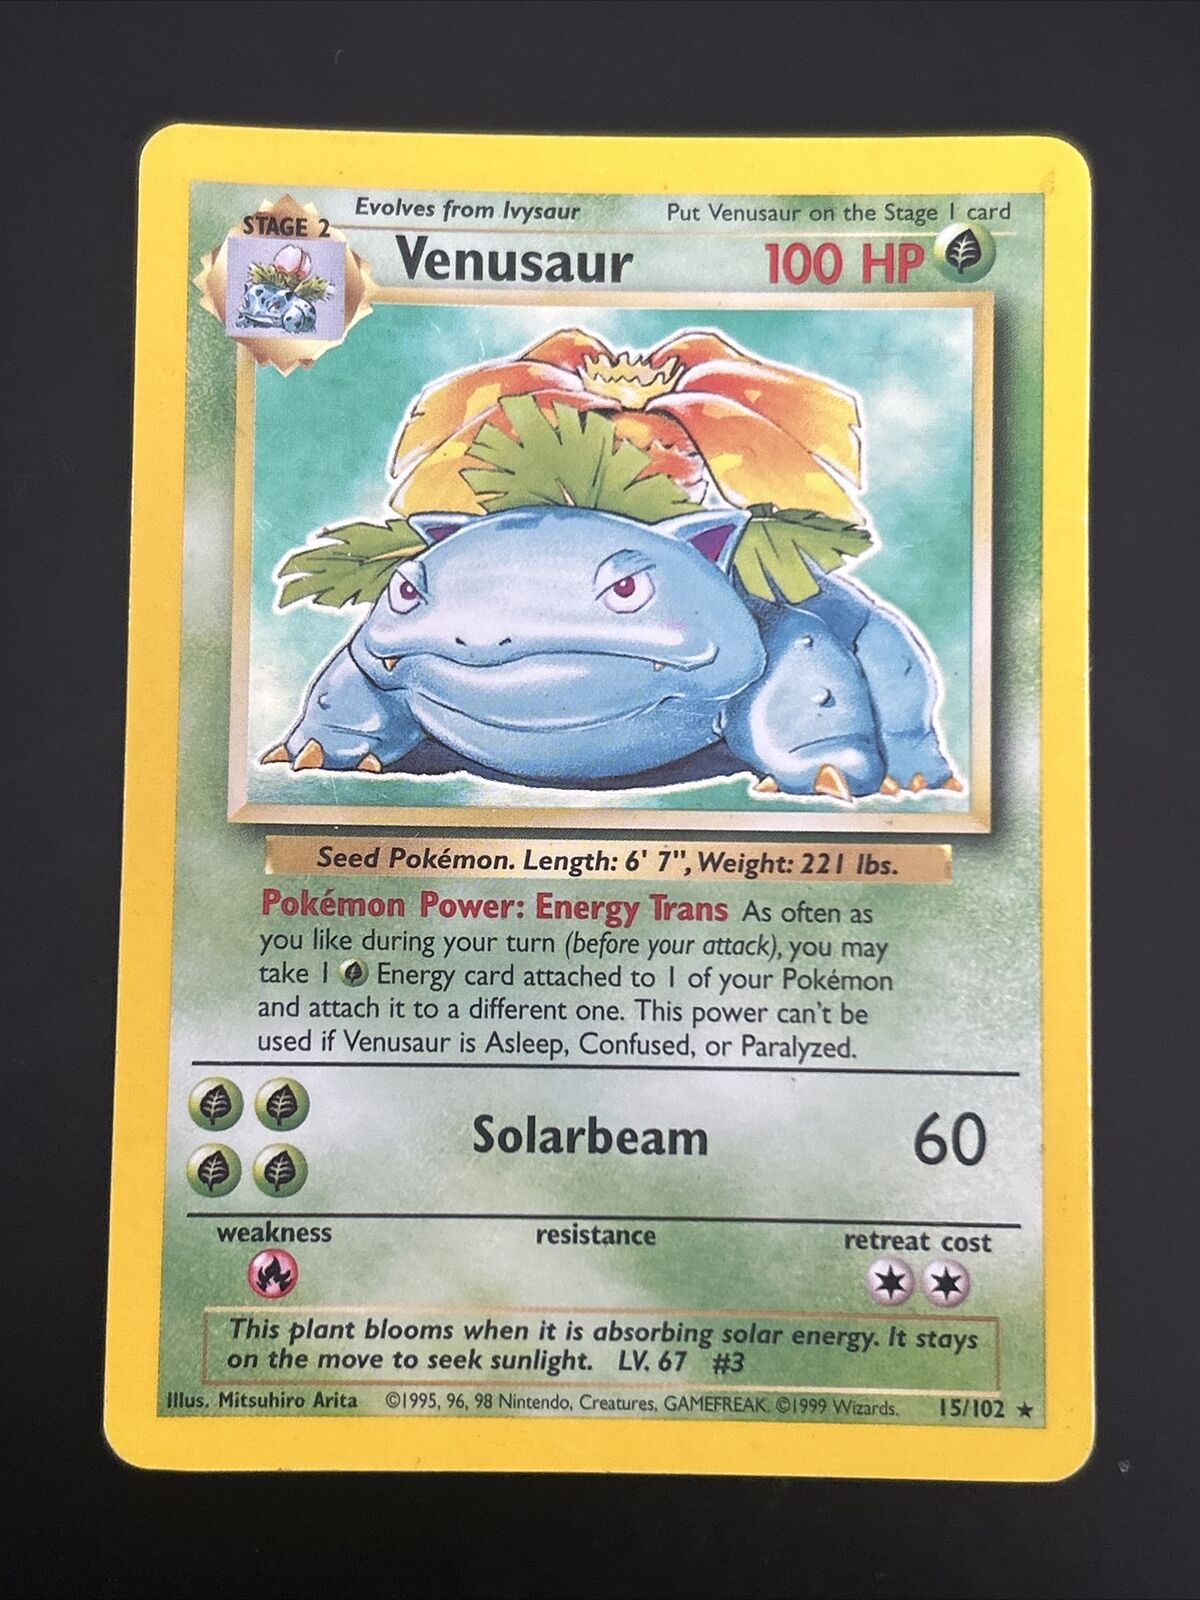 Pokémon TCG Venusaur Base Set 15/102 Holo Unlimited Holo Rare